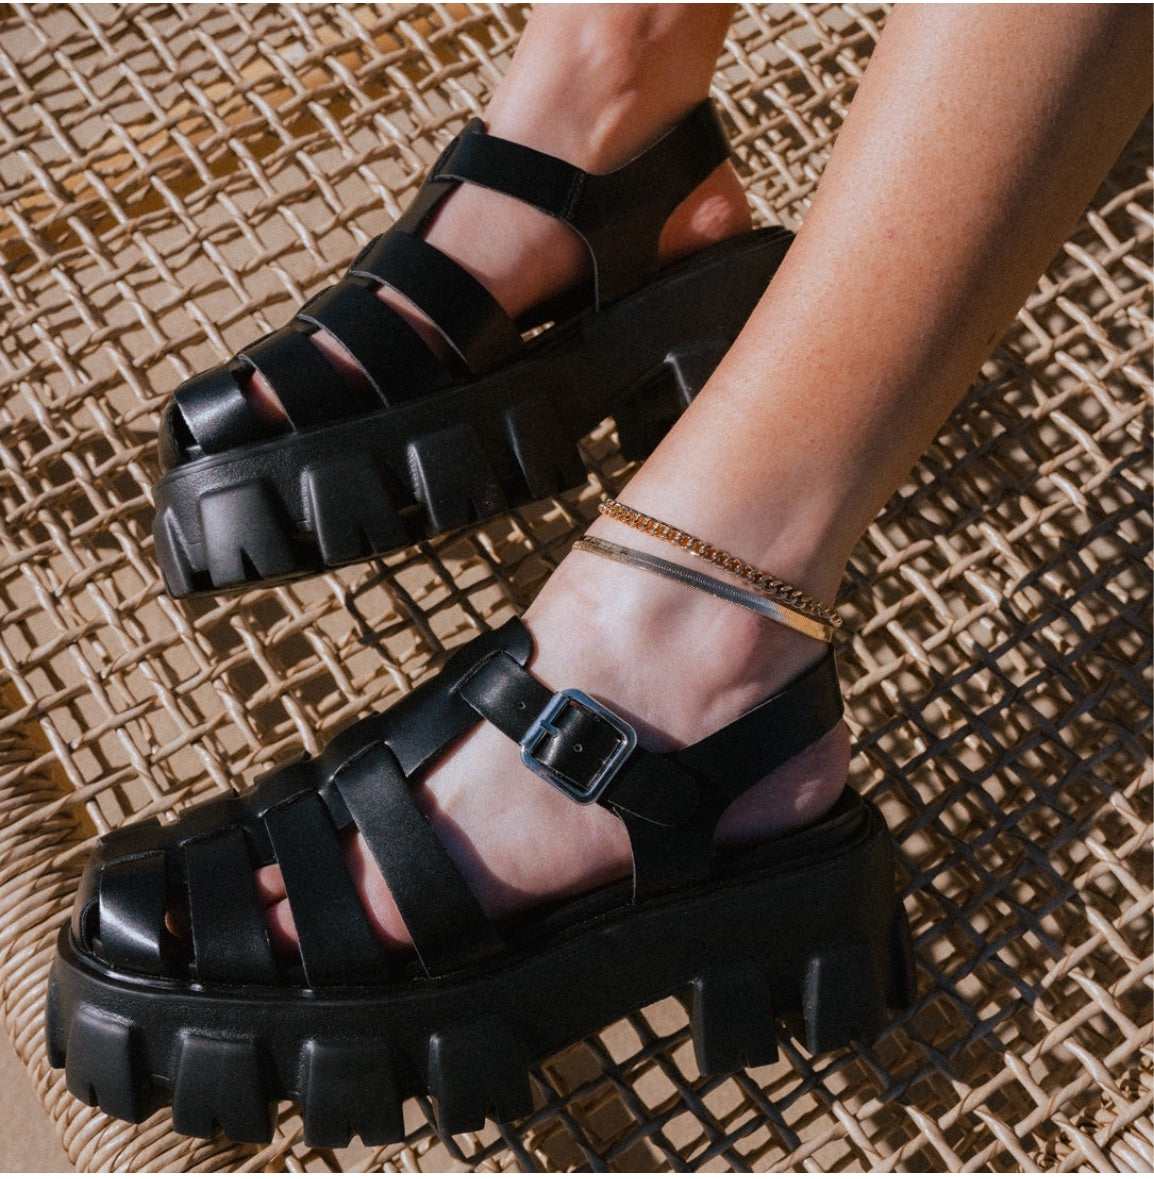 Gladiator sandals | gladiator sandals for women